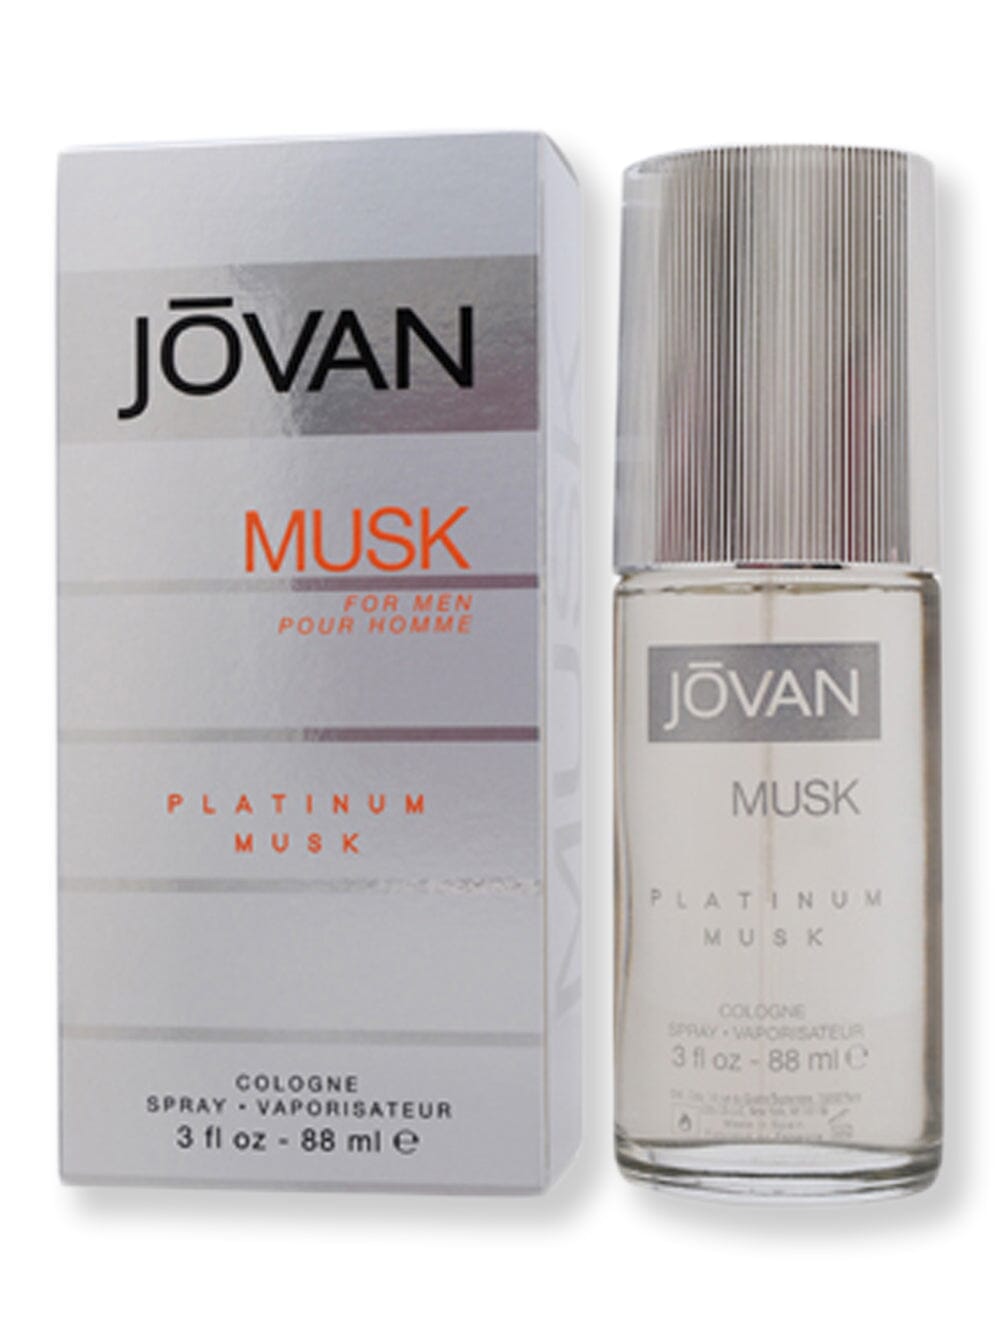 Jovan Jovan Platinum Musk Cologne Spray 3 oz88 ml Cologne 